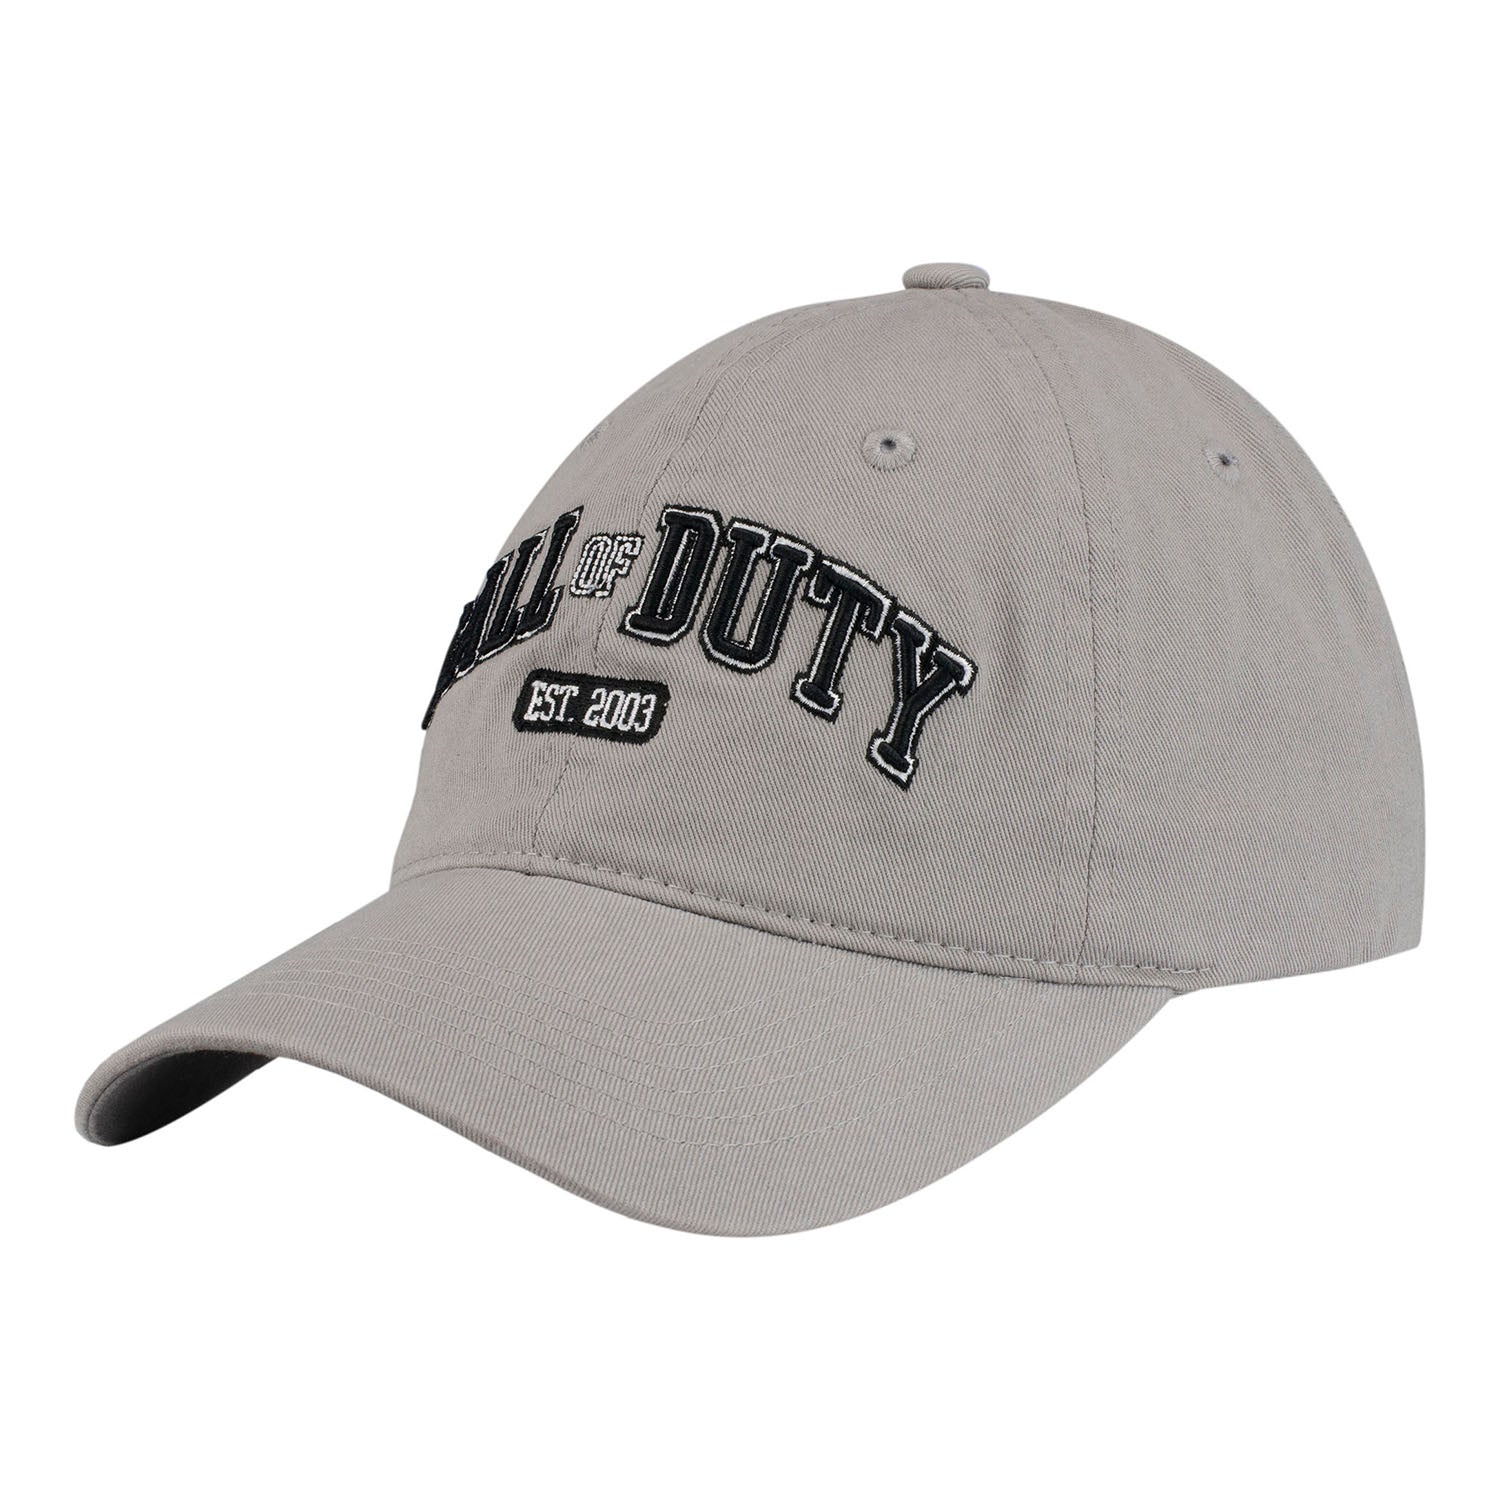 Call of Duty Grey Alumnus Hat - Left View